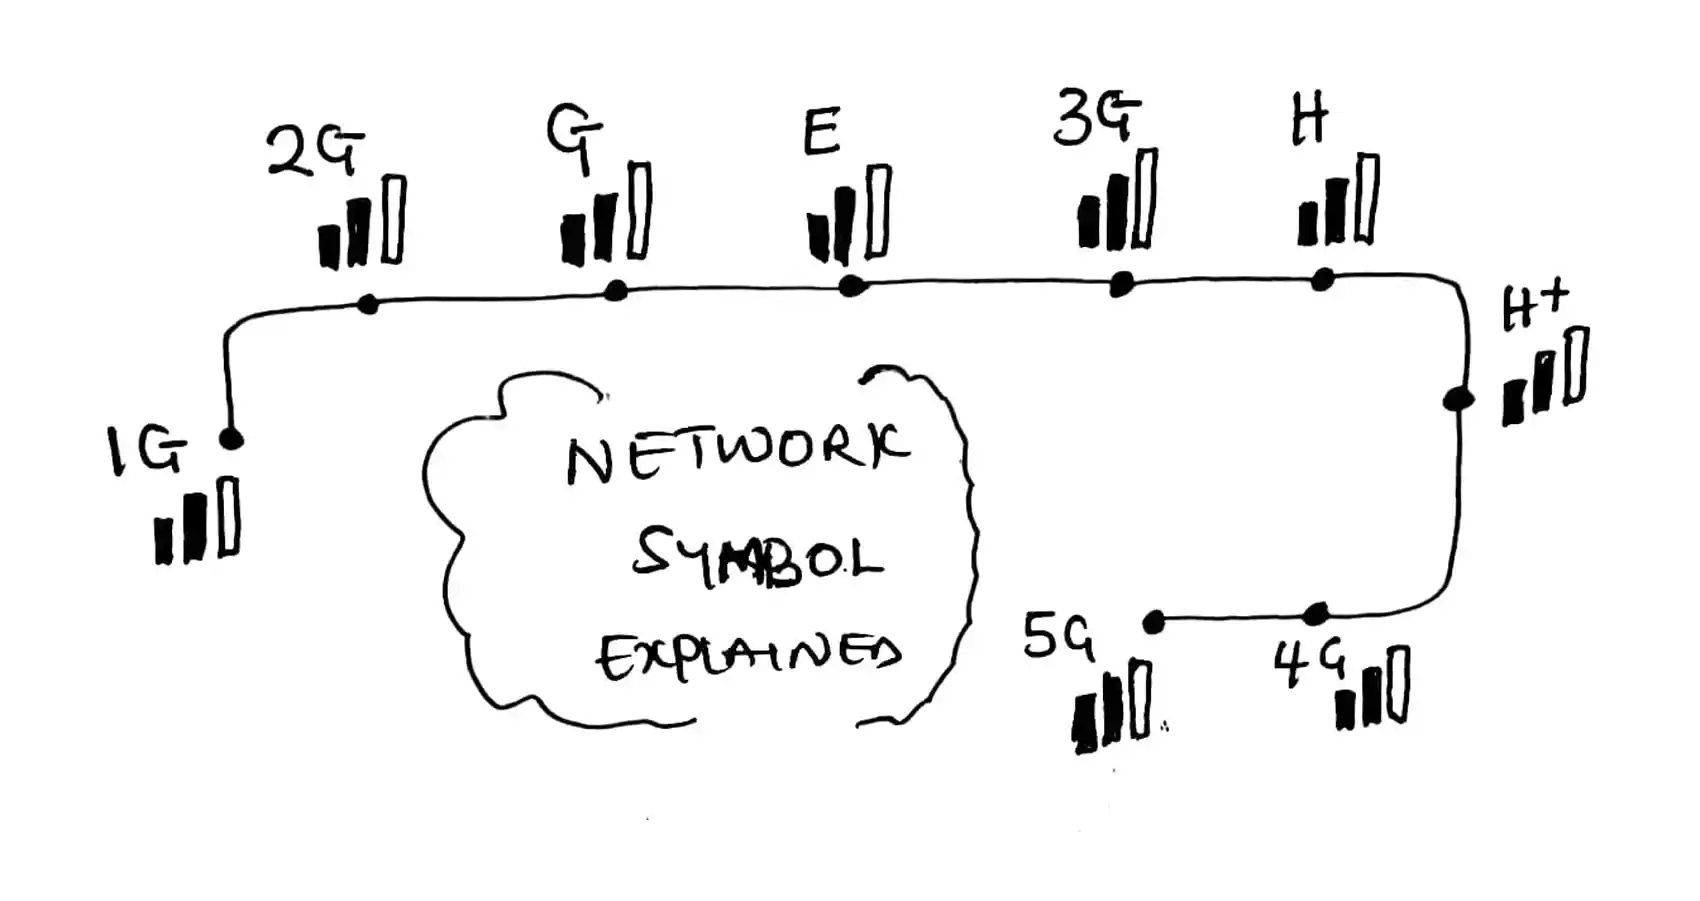 mobile network symbol explained